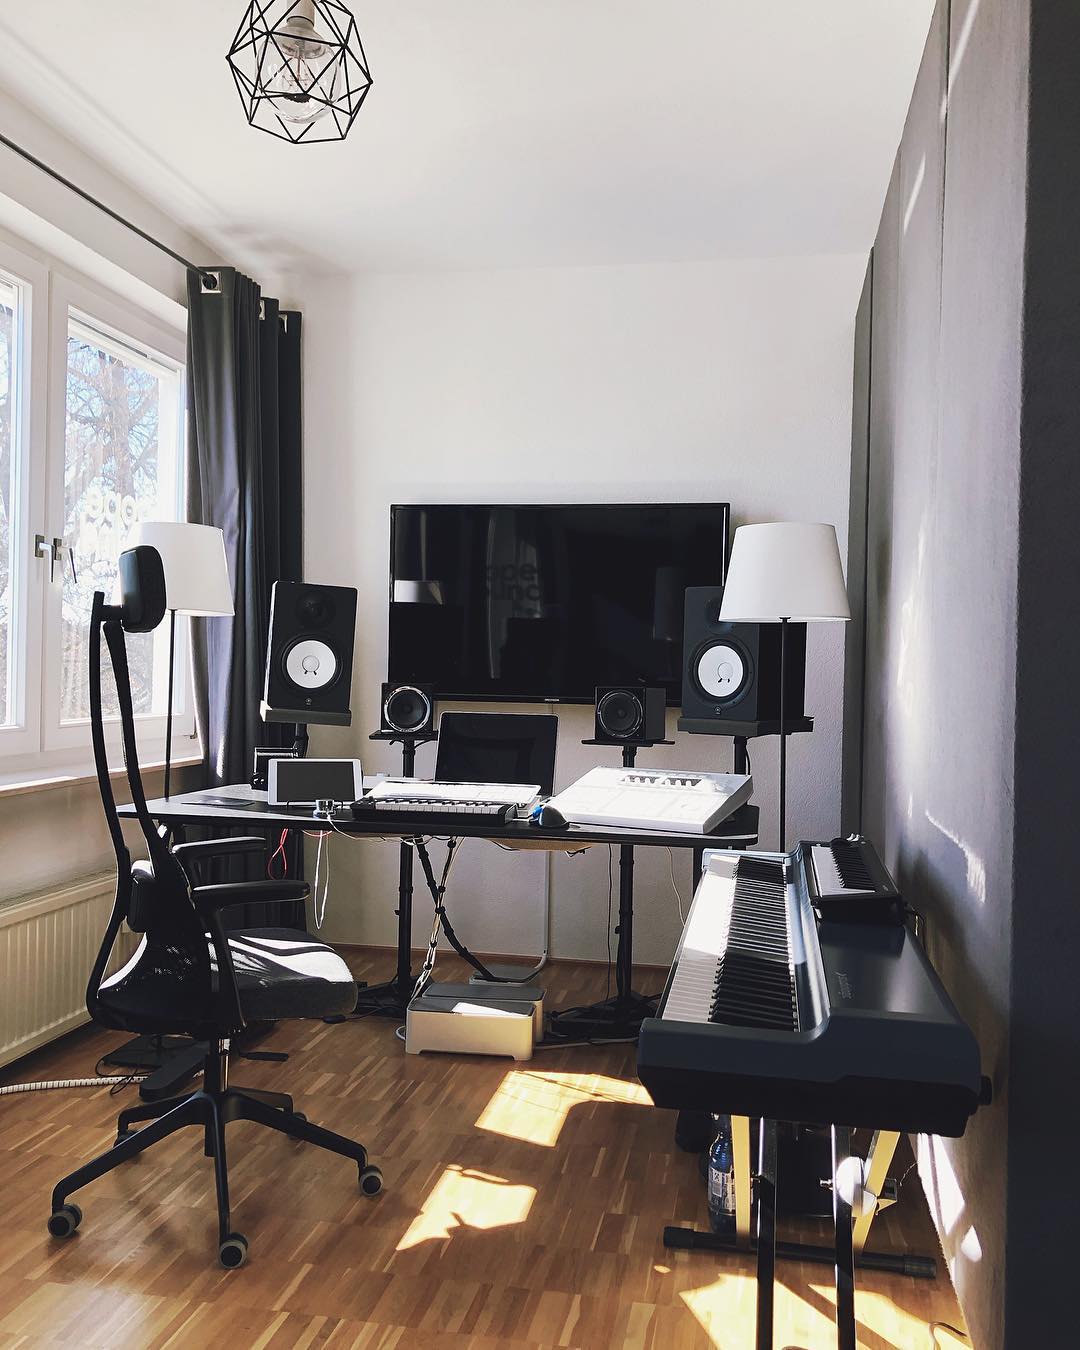 How to Transform a Spare Room into a Home Music Studio | Extra Space